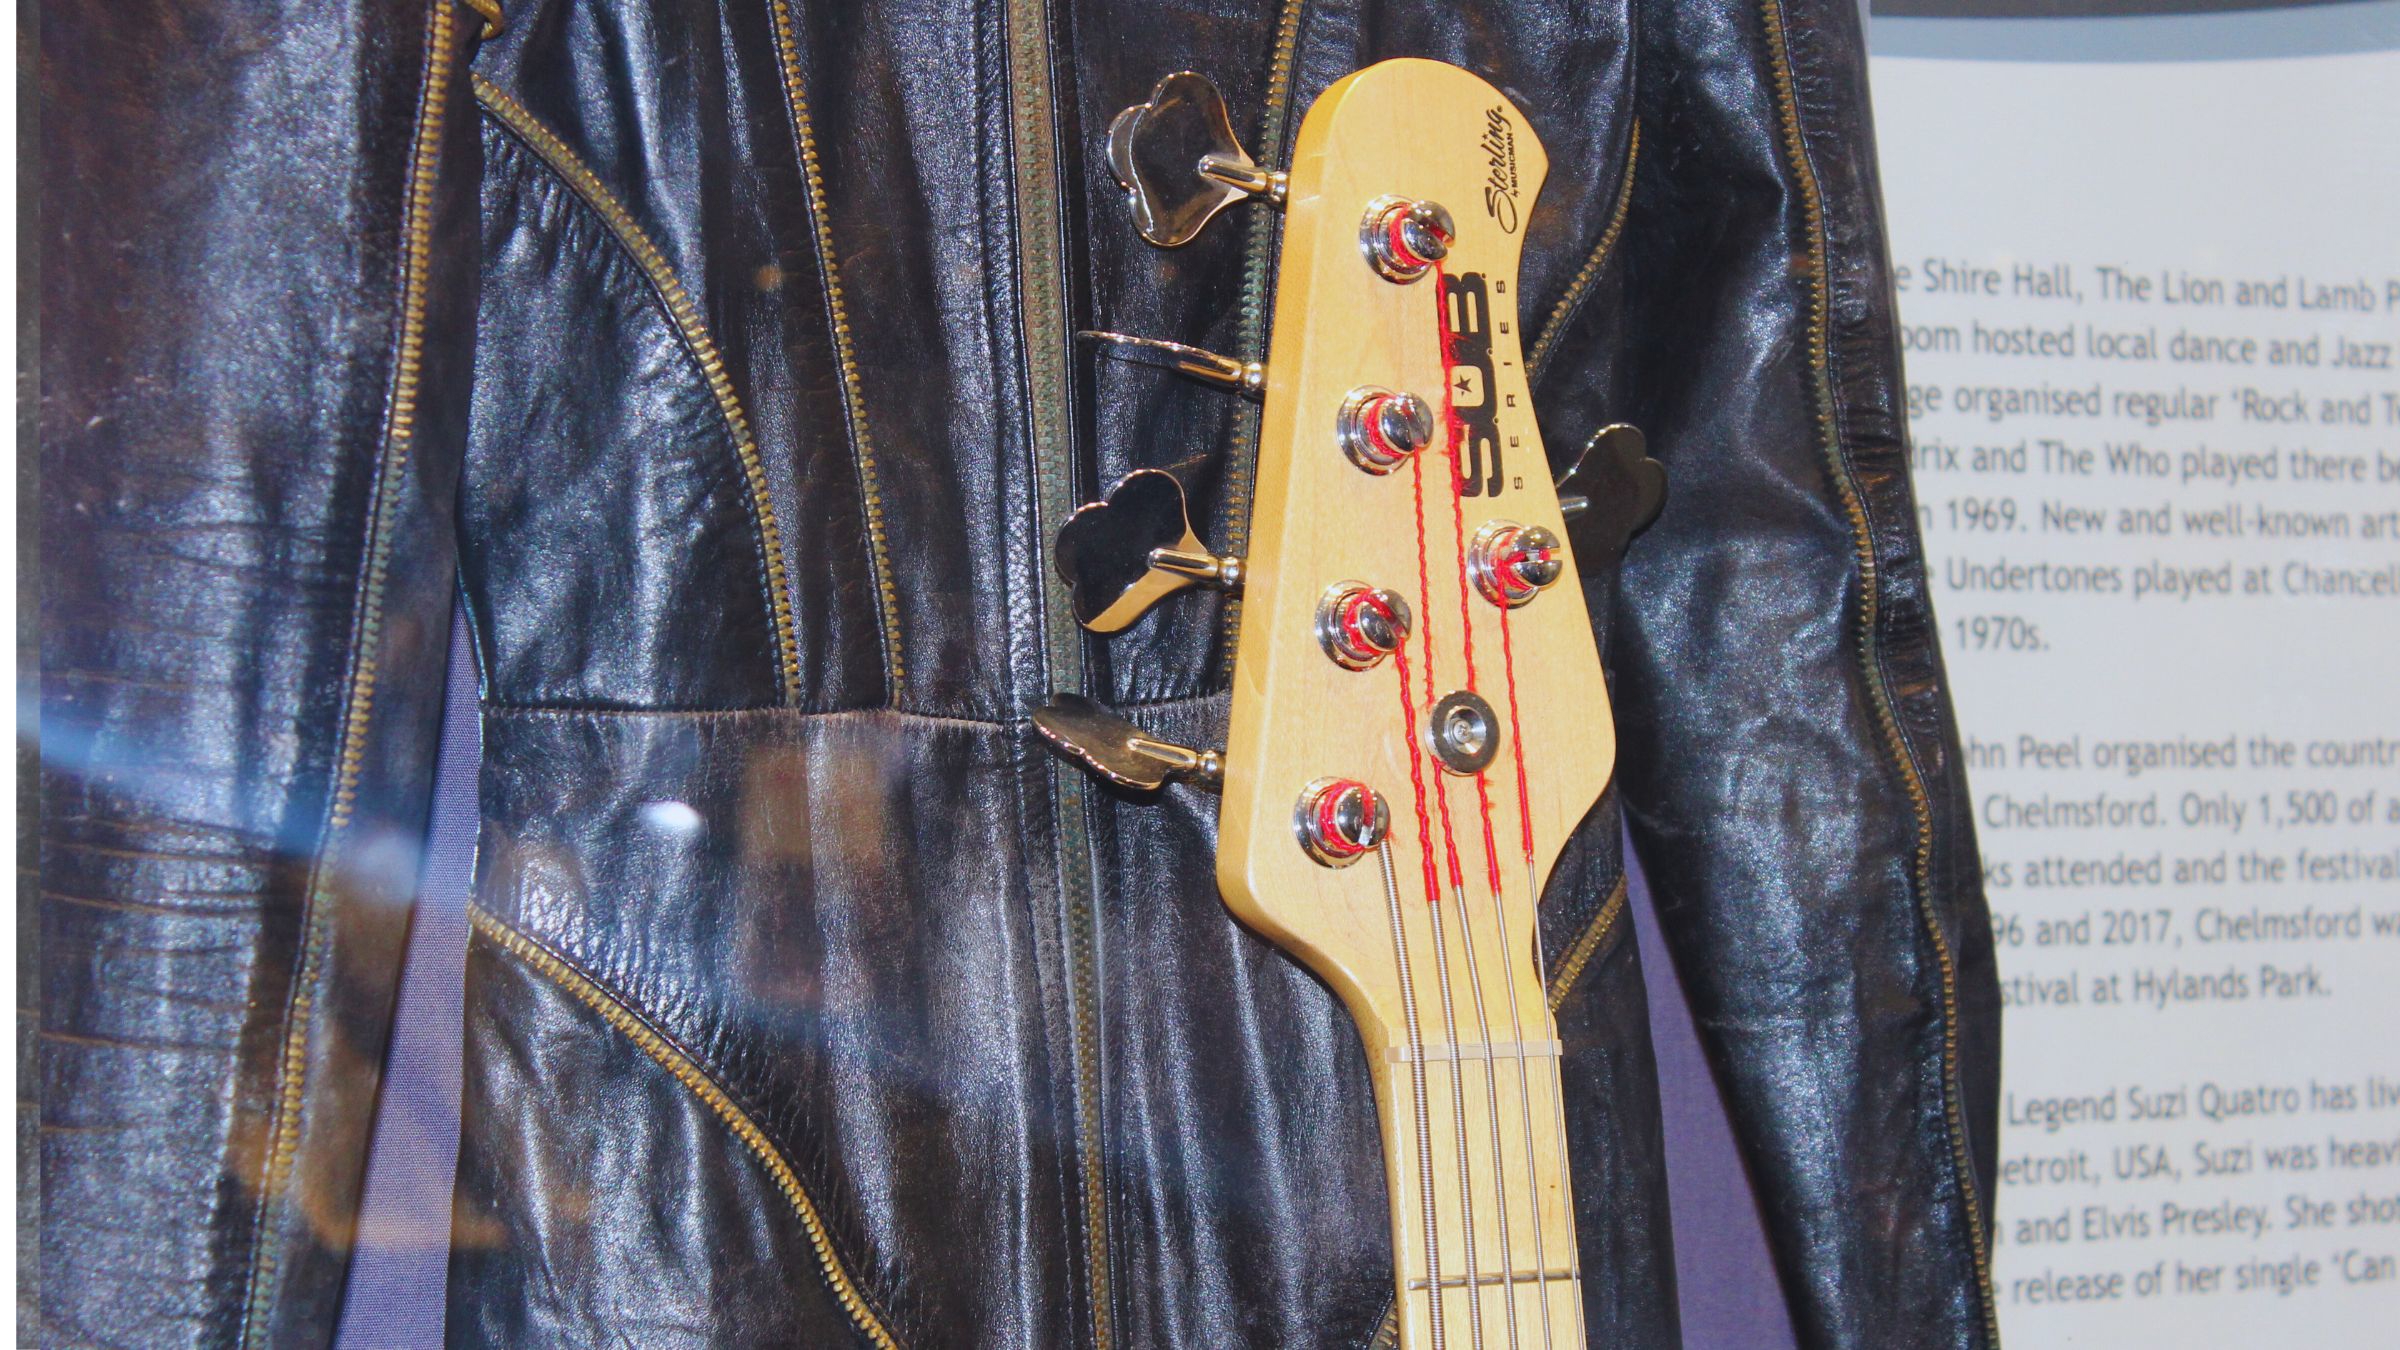 The neck of Suzi Quatro's black bass guitar